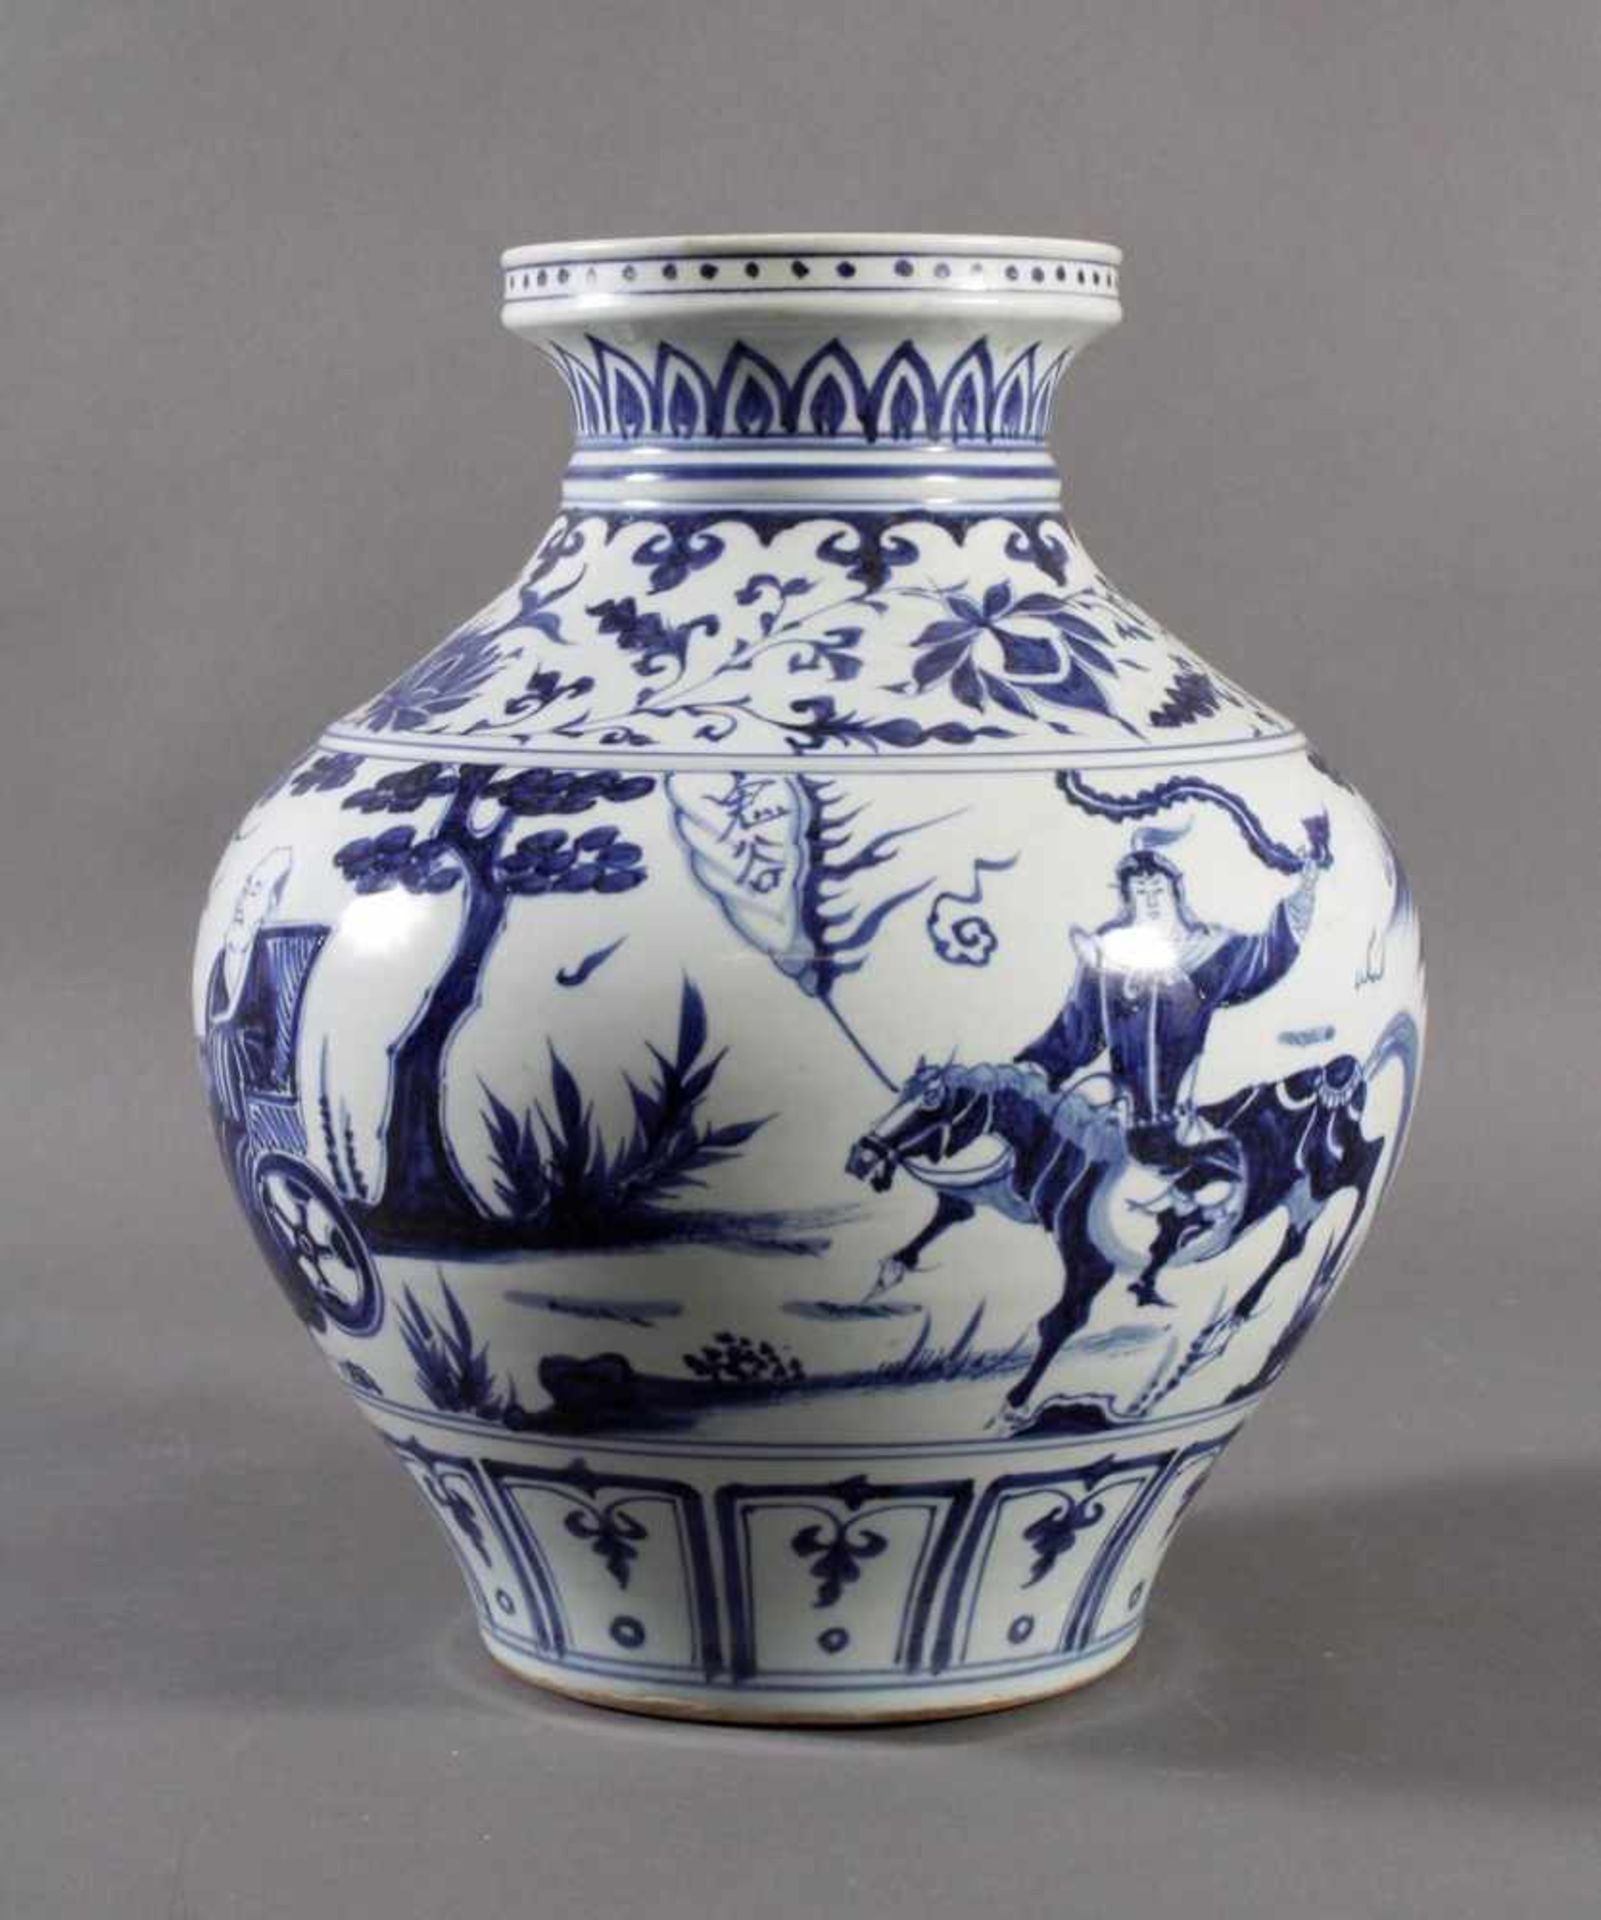 Große Porzellanvase China, wohl 19. Jahrhundert<